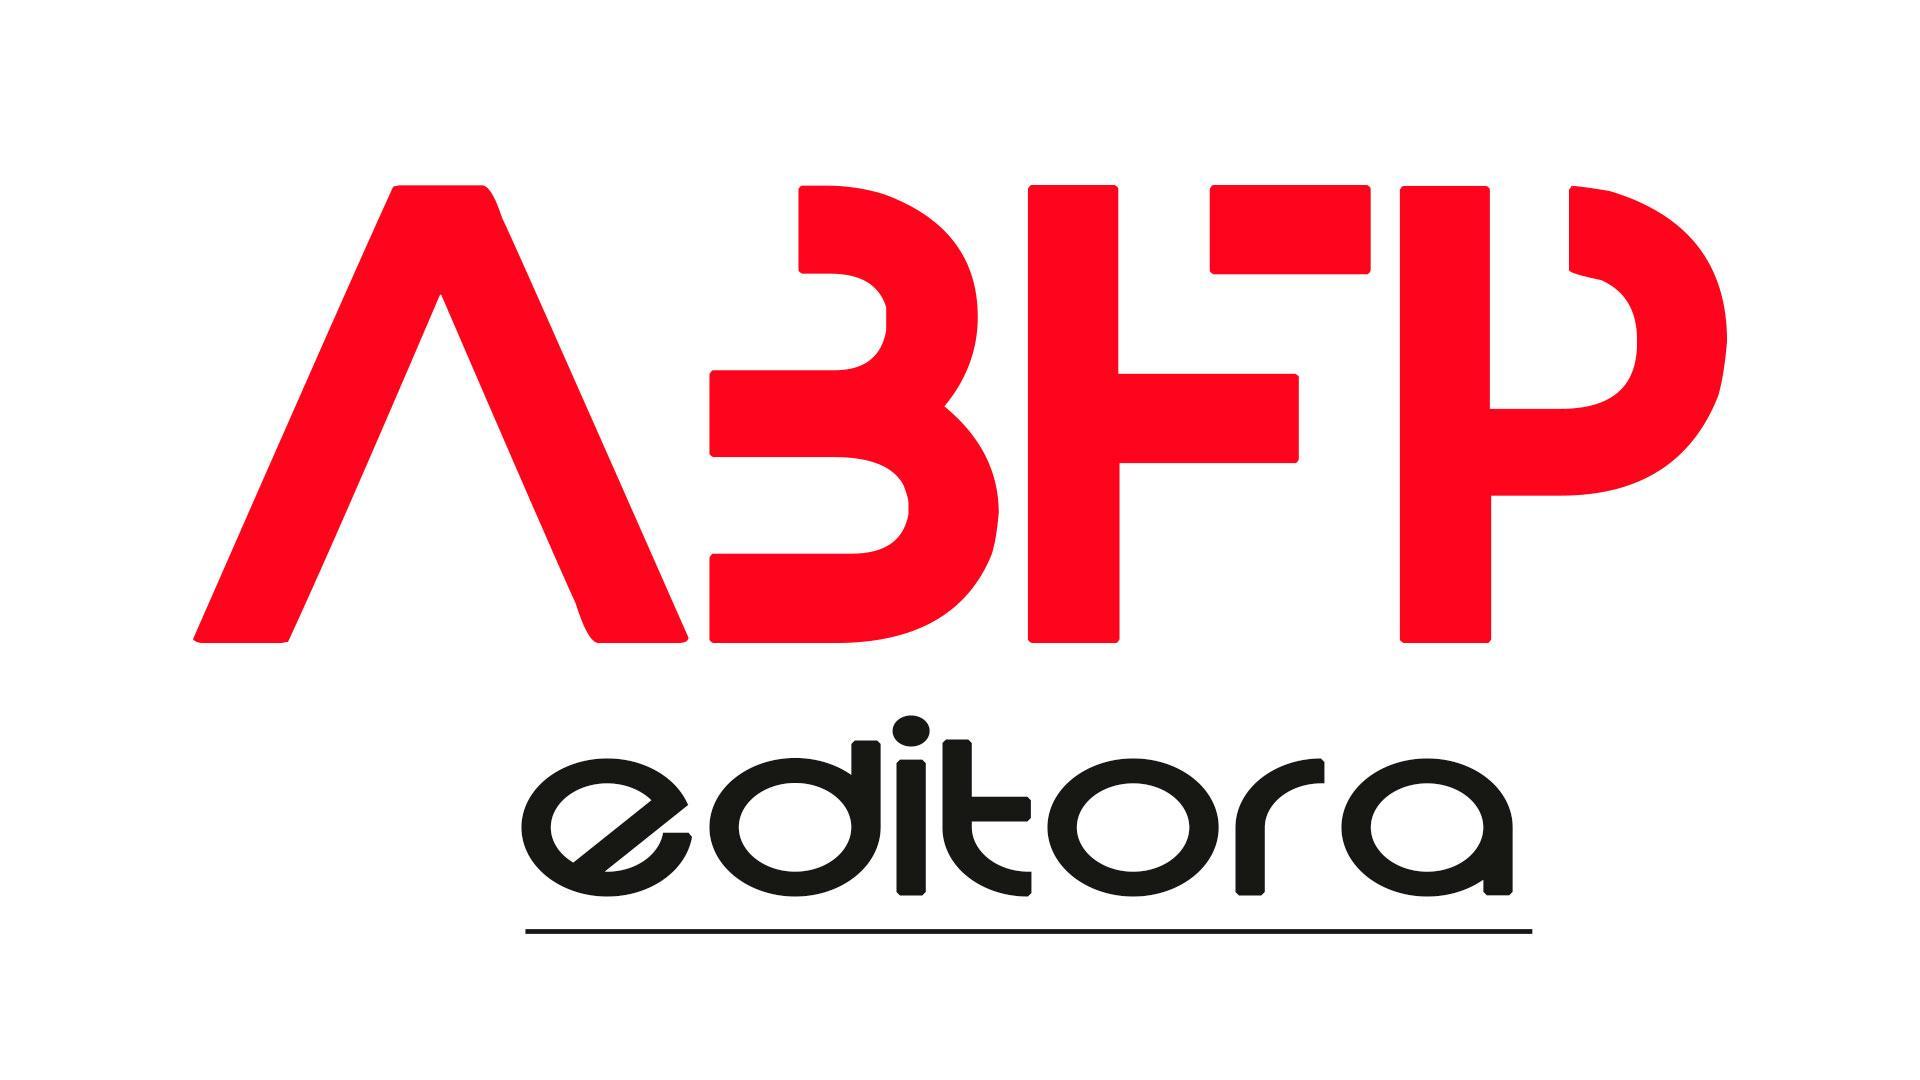 ABFP editora